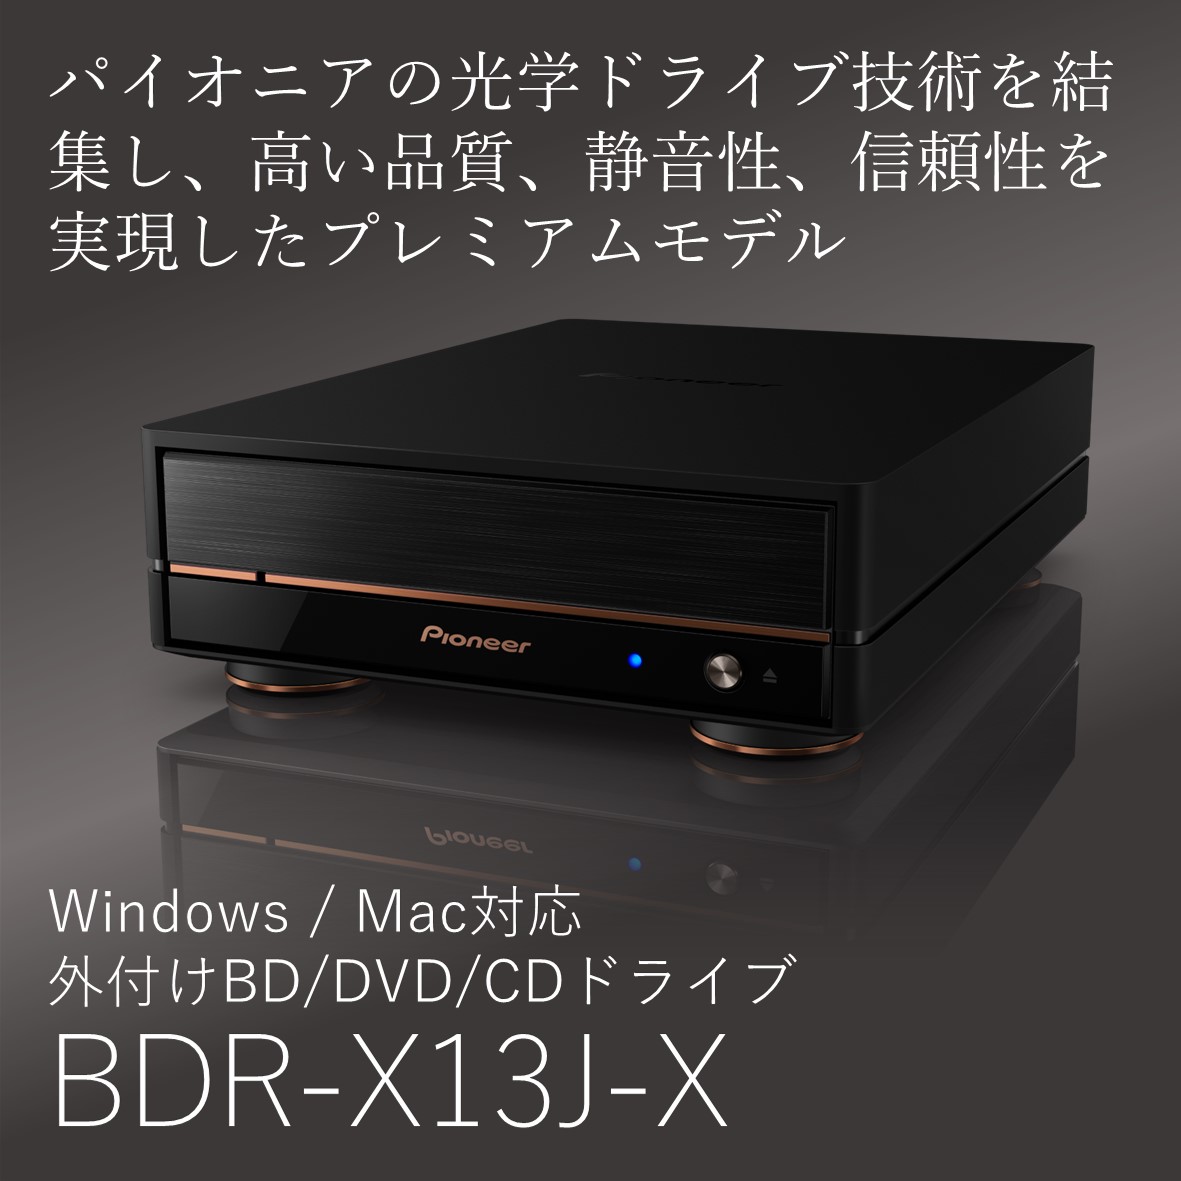 BDR-X13J-X販売ページ